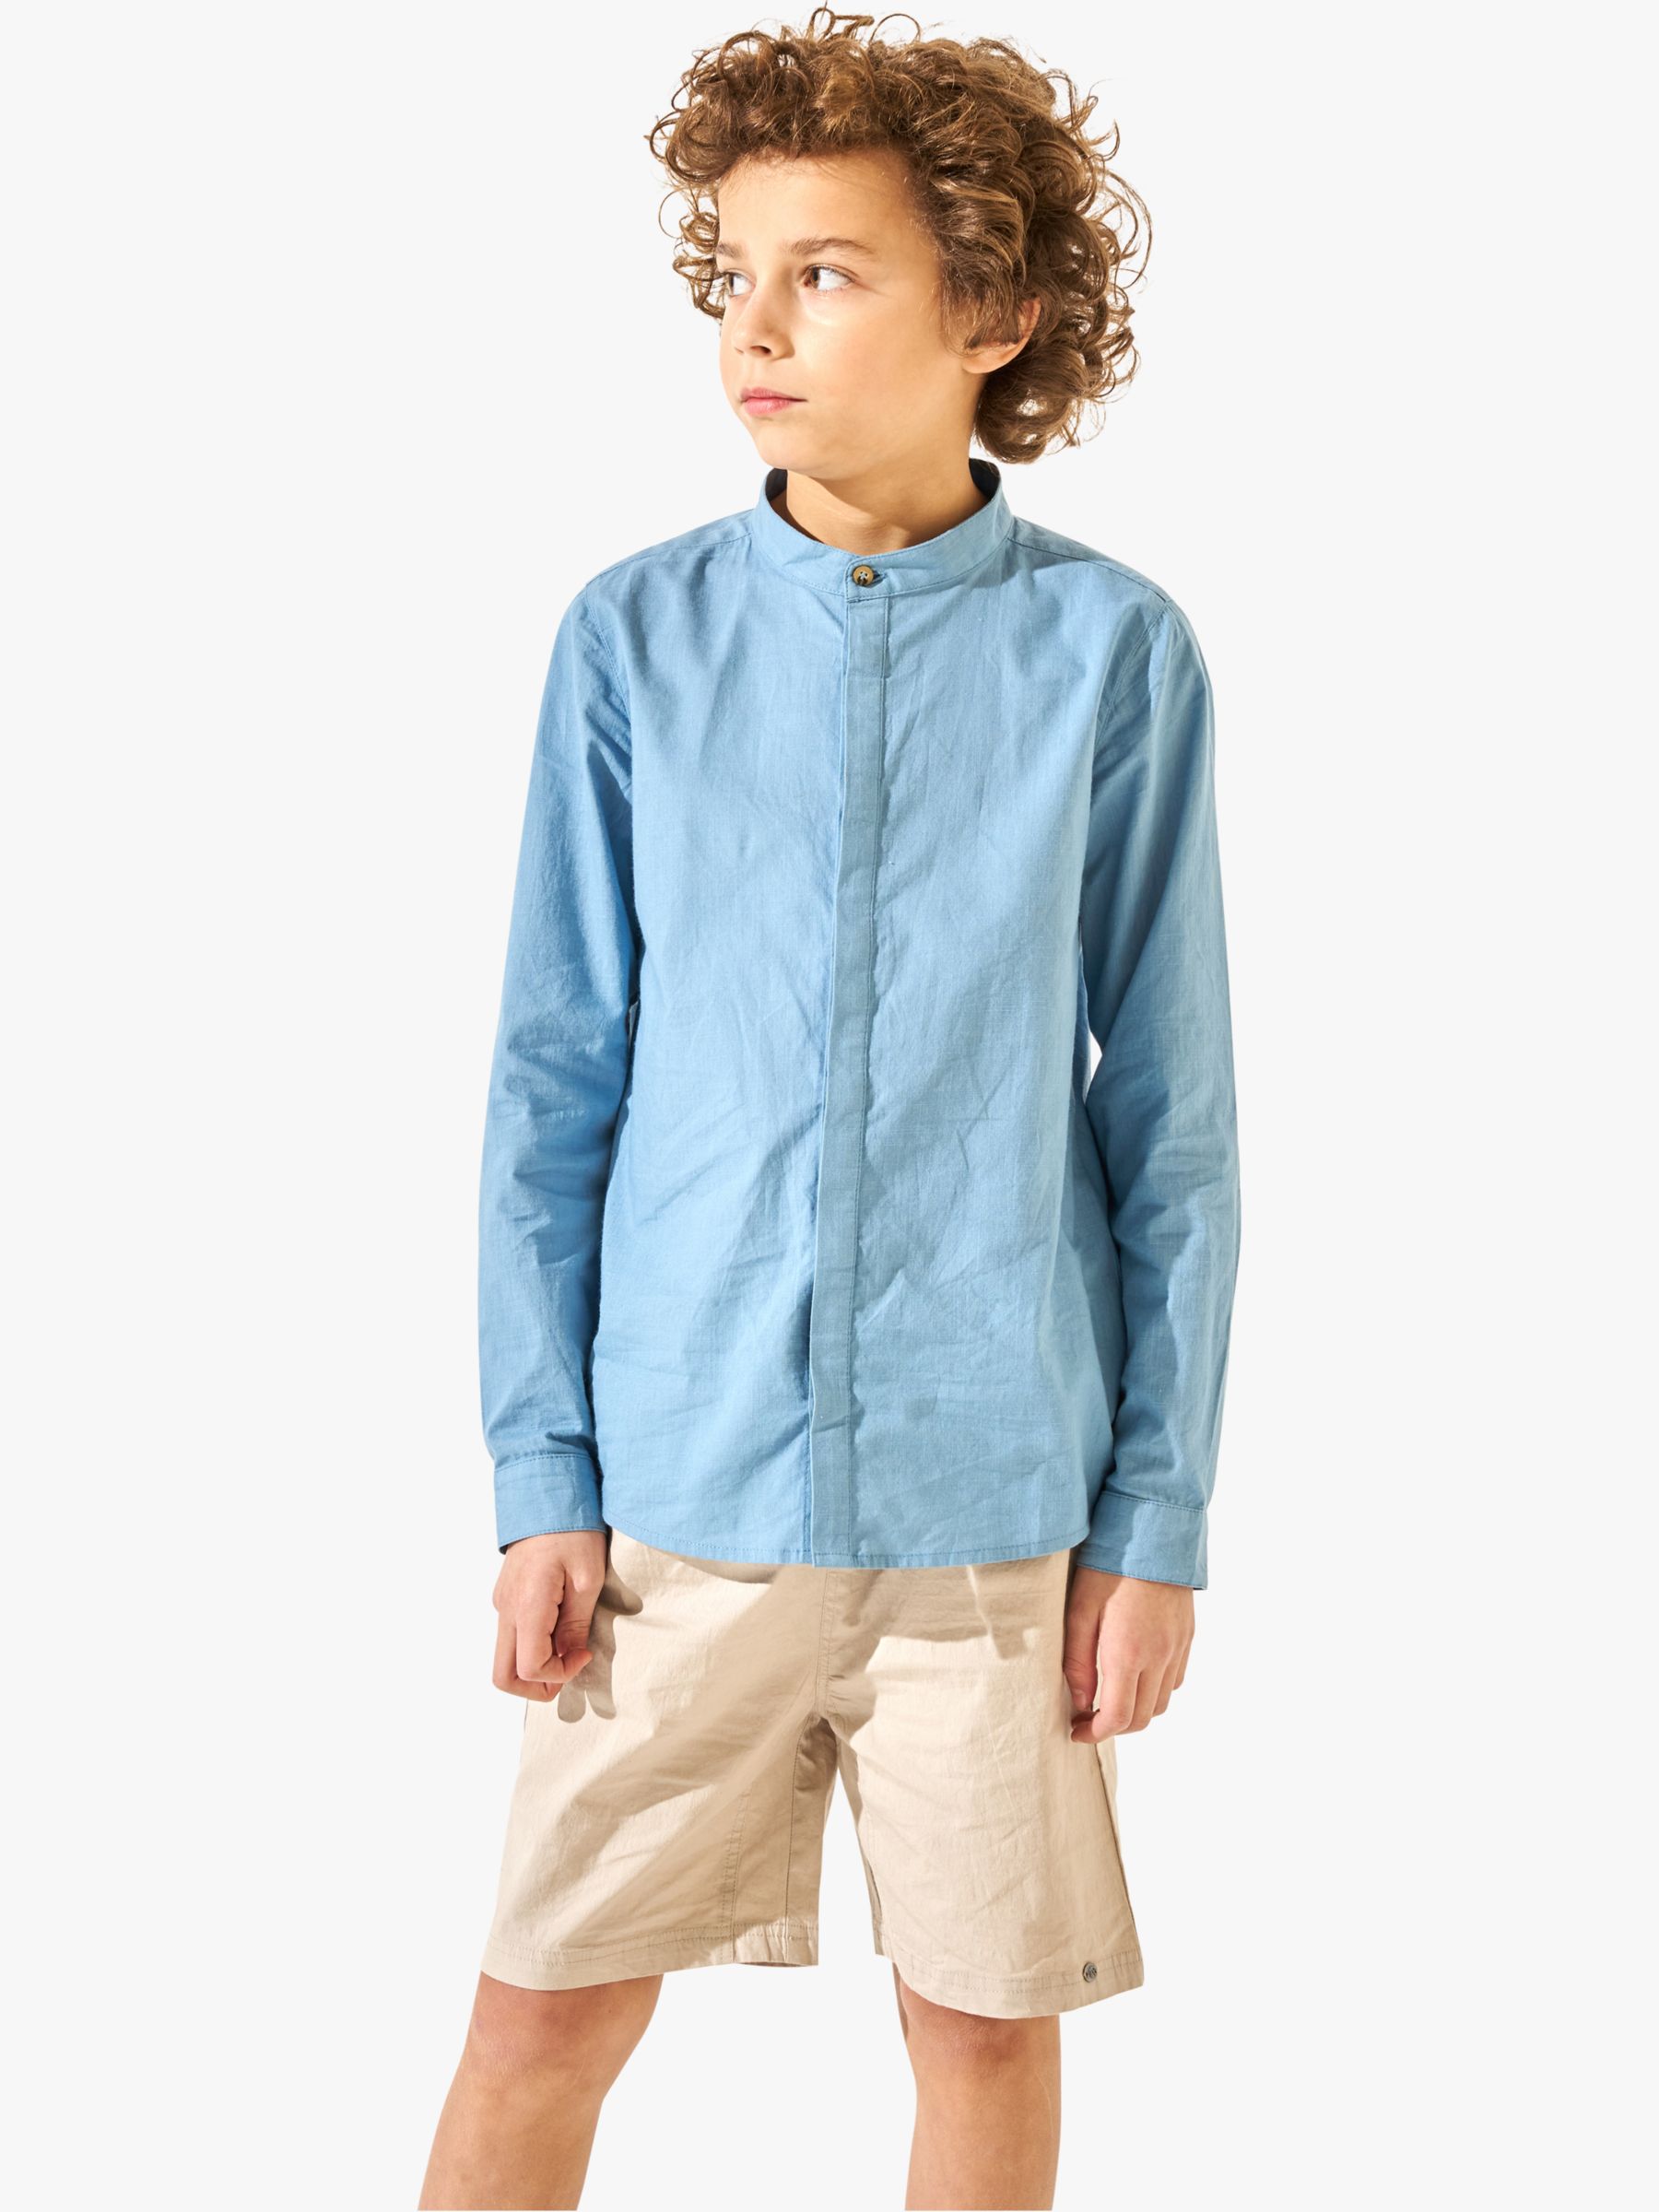 Angel & Rocket Kids' Long Sleeve Mandarin Shirt, Blue, 6 years